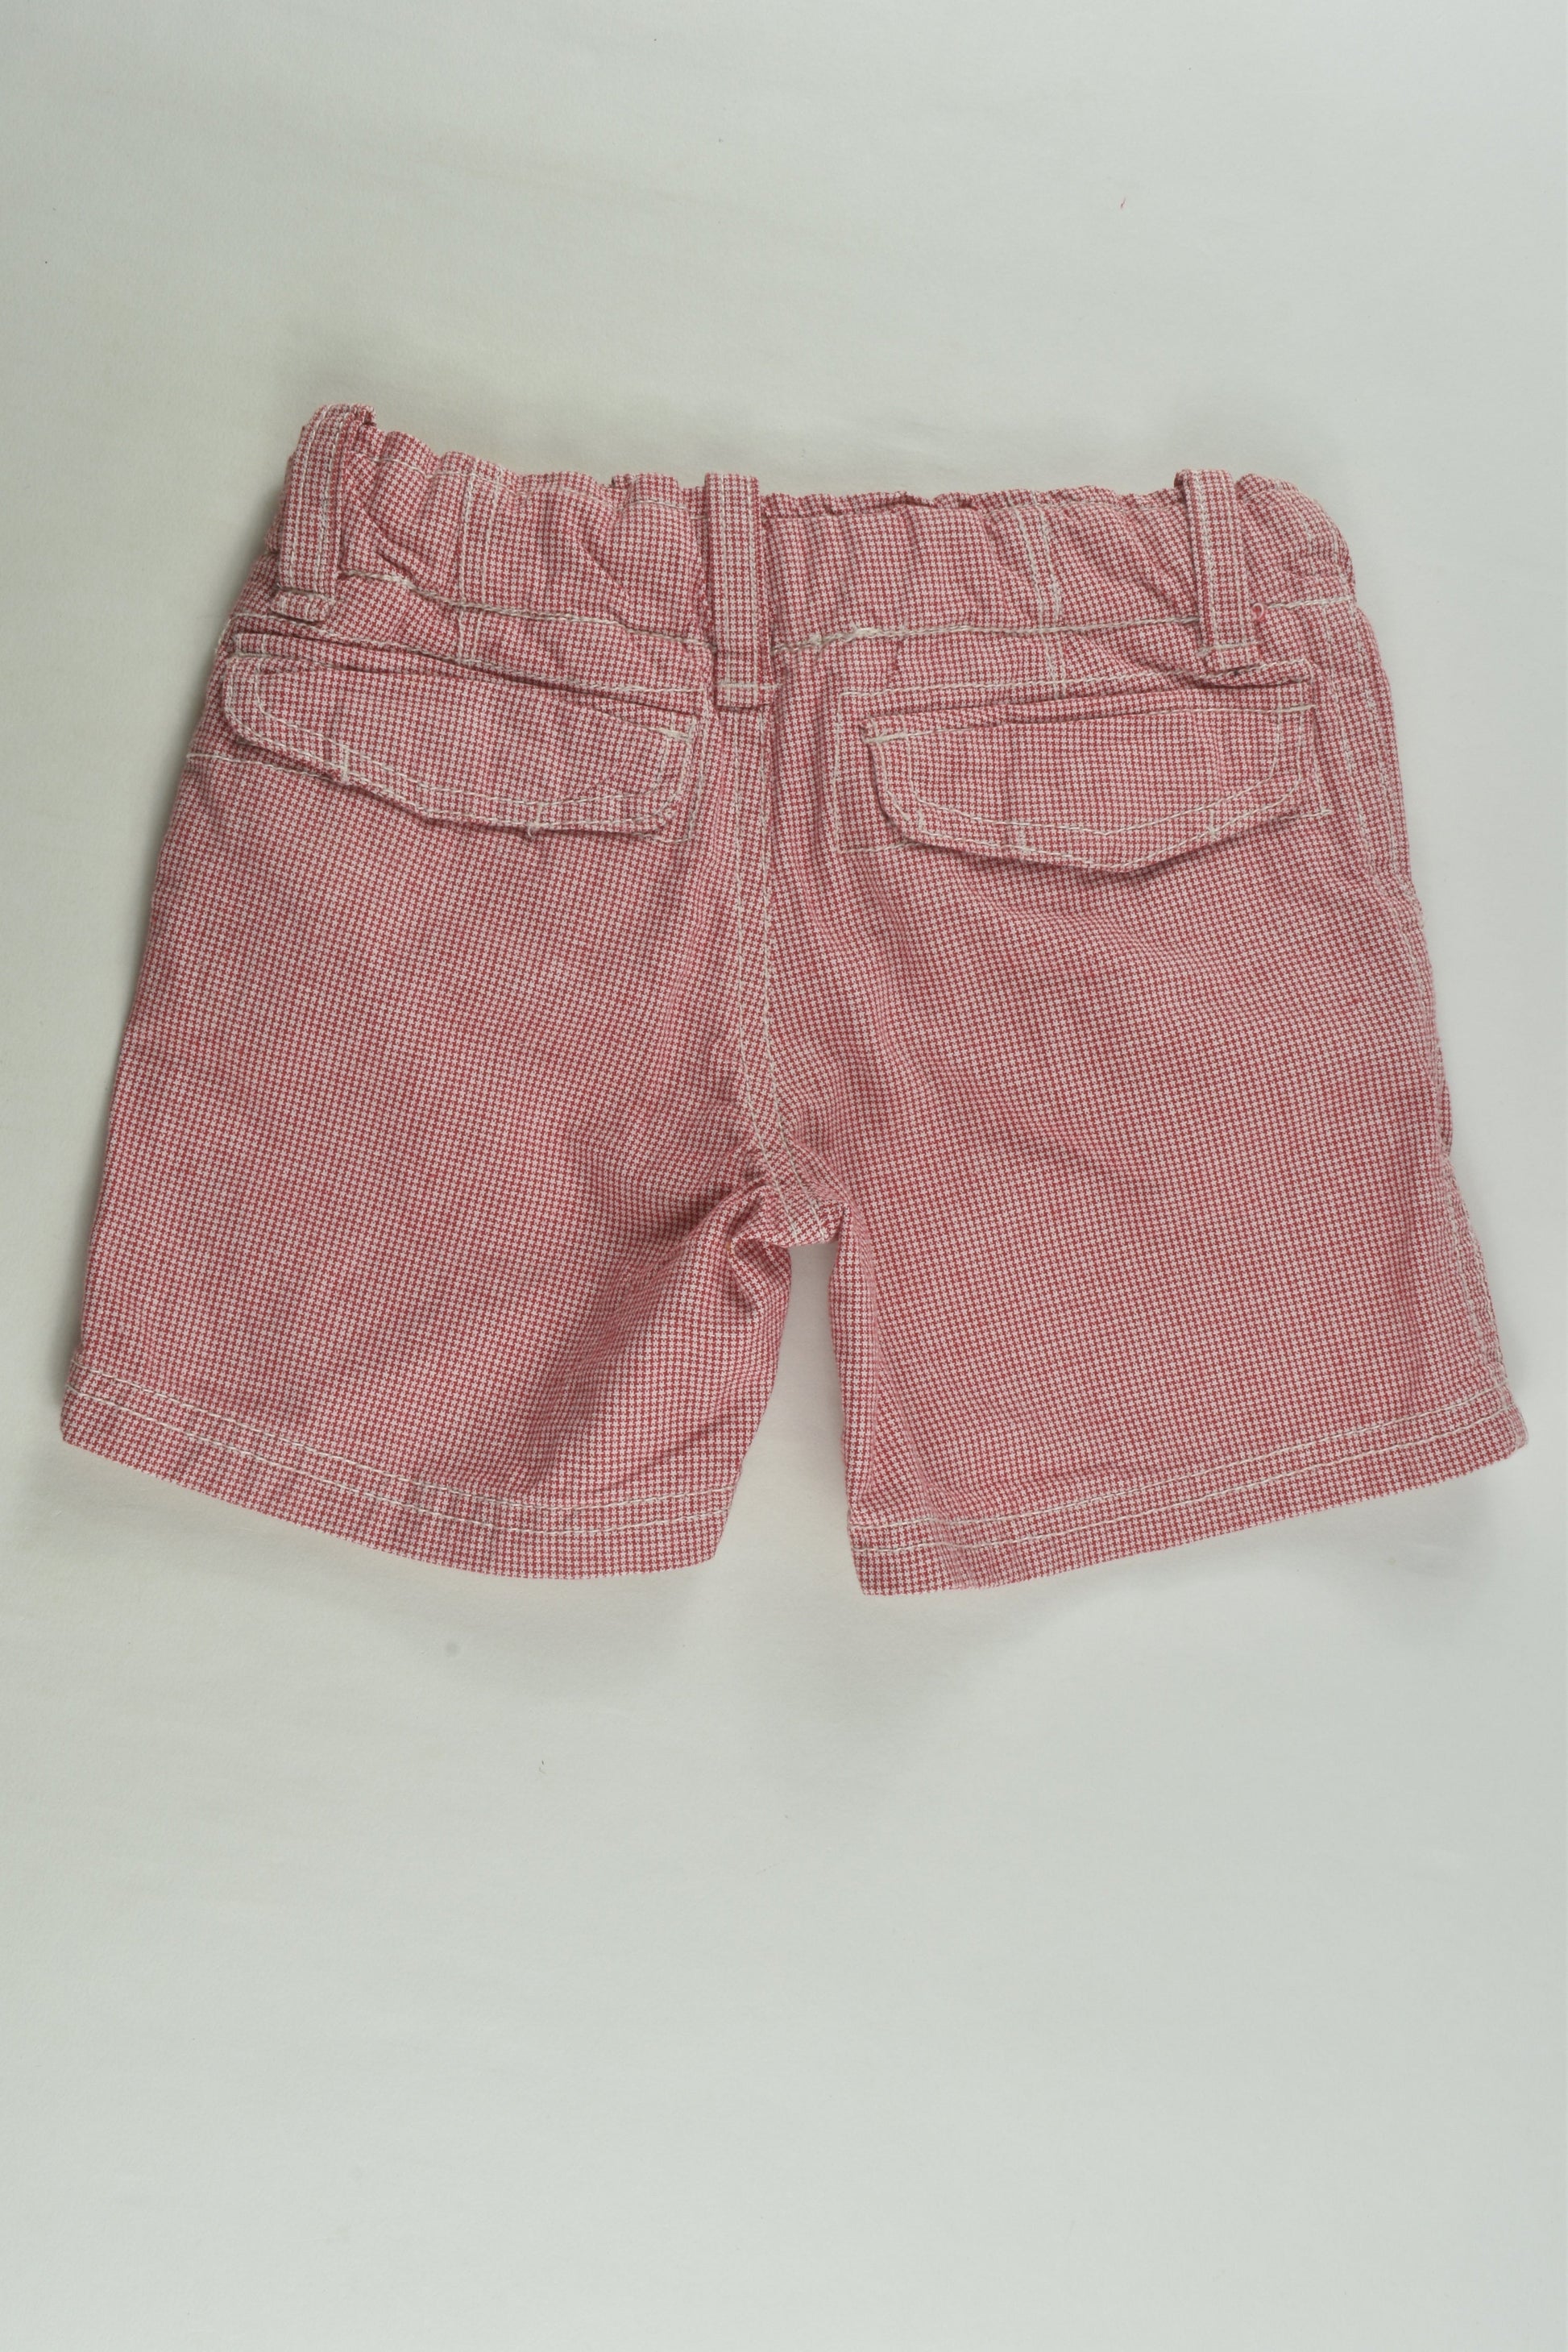 Cotton On Kids Size 2 Shorts